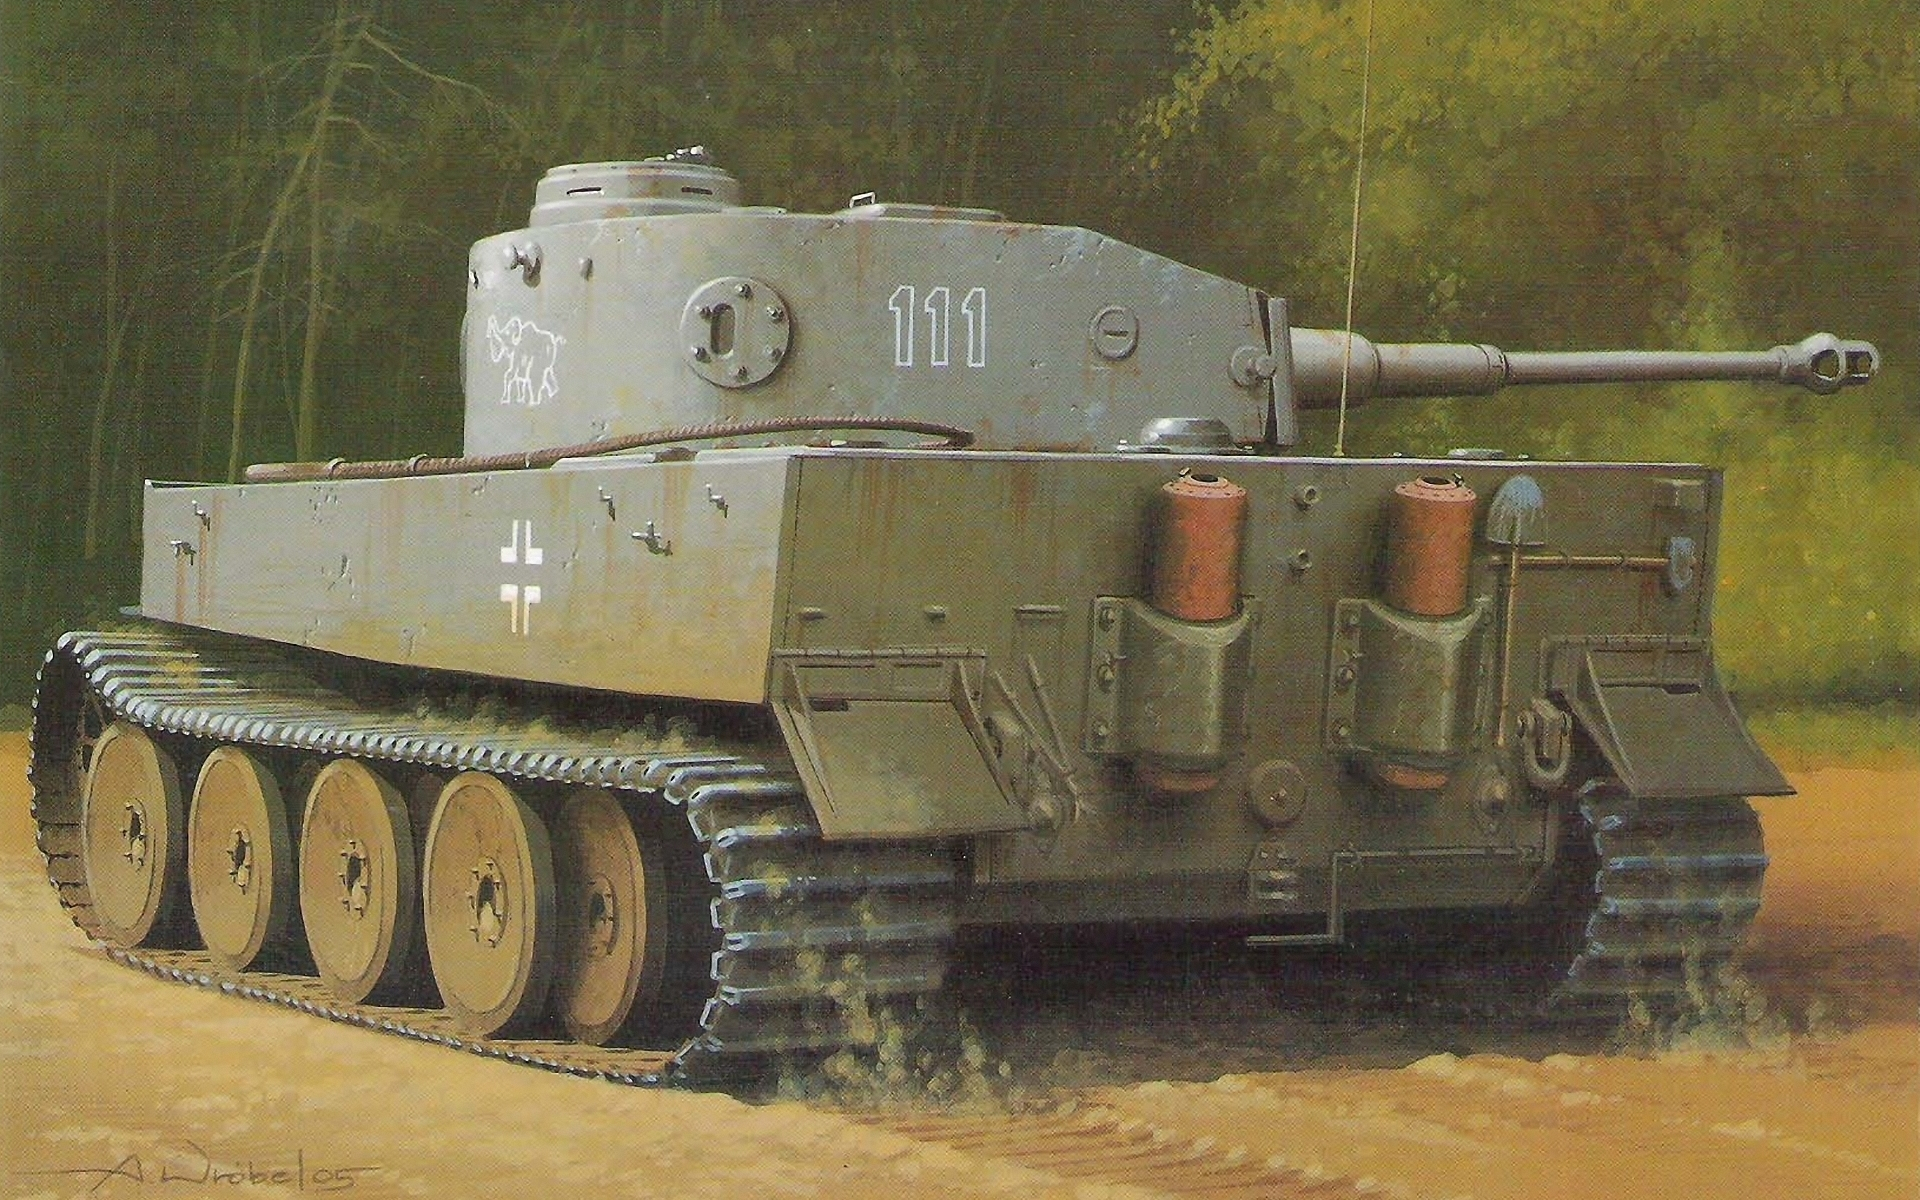 Название тигра 1. Танк тигр второй мировой войны танки Германии. Танк тигр ww2. Тигр танк второй мировой. Танк Германии ww2.